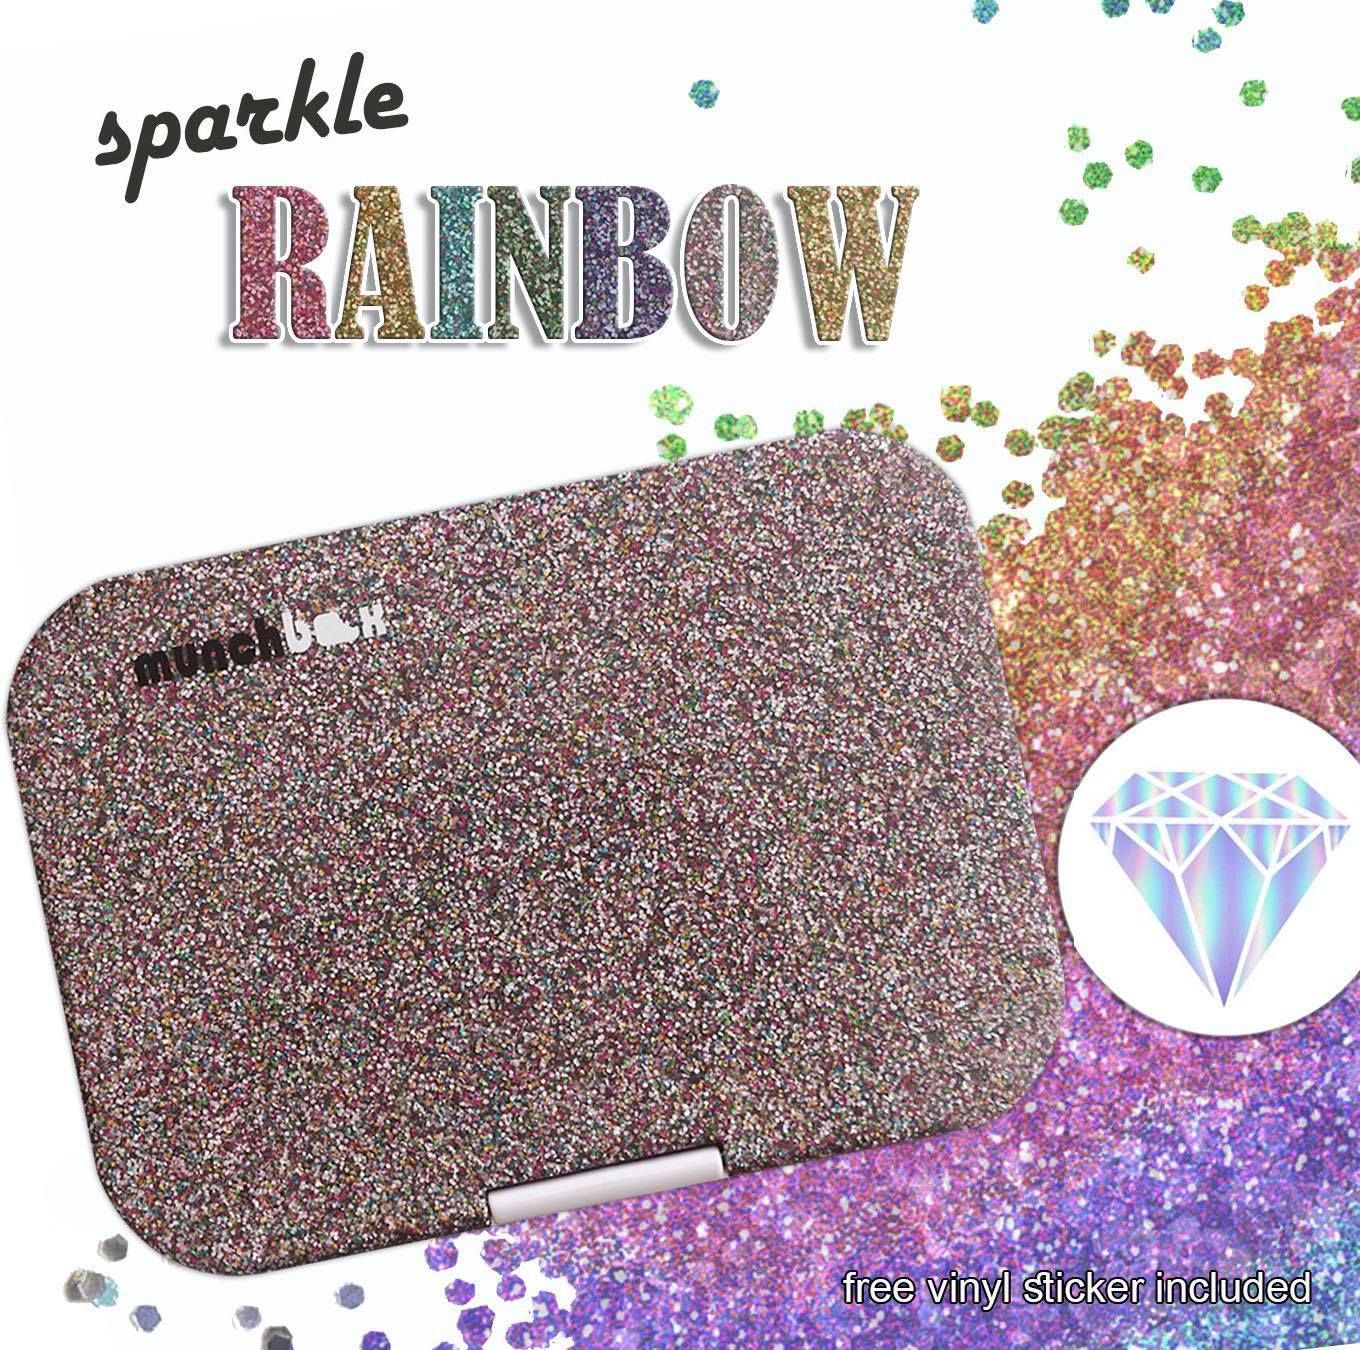 Munchbox Mega 4 - Sparkle Rainbow